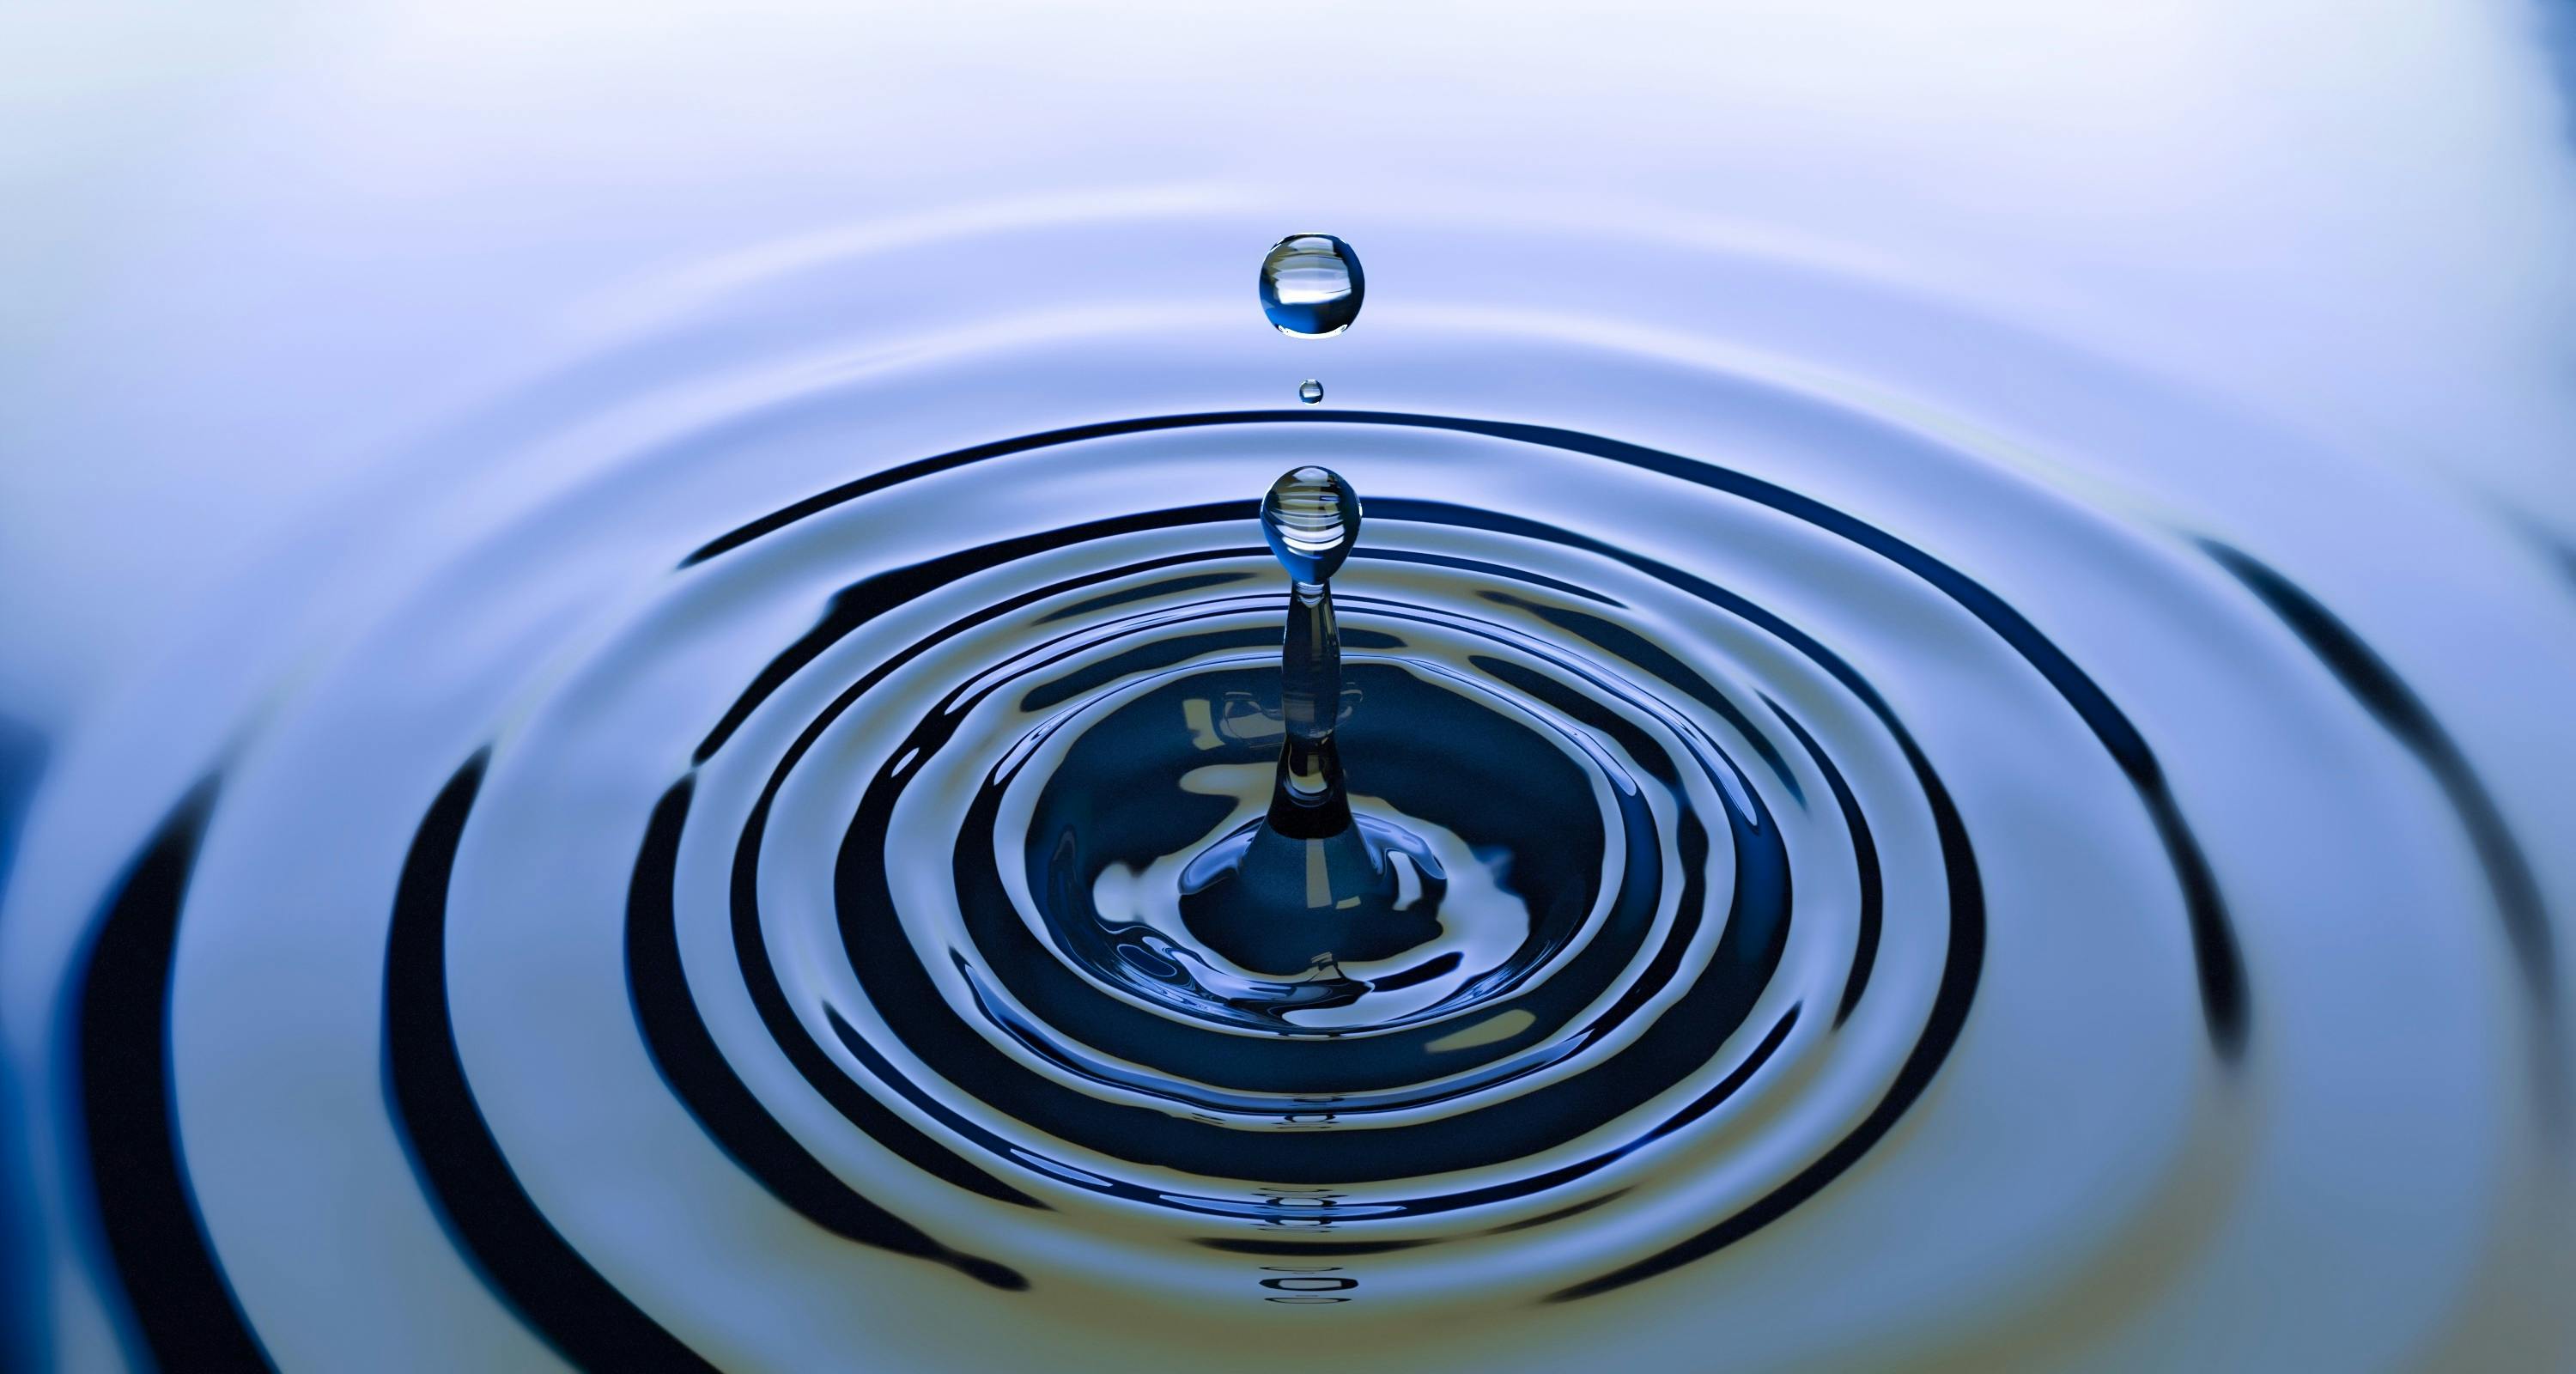 Water Drop Photo · Free Stock Photo